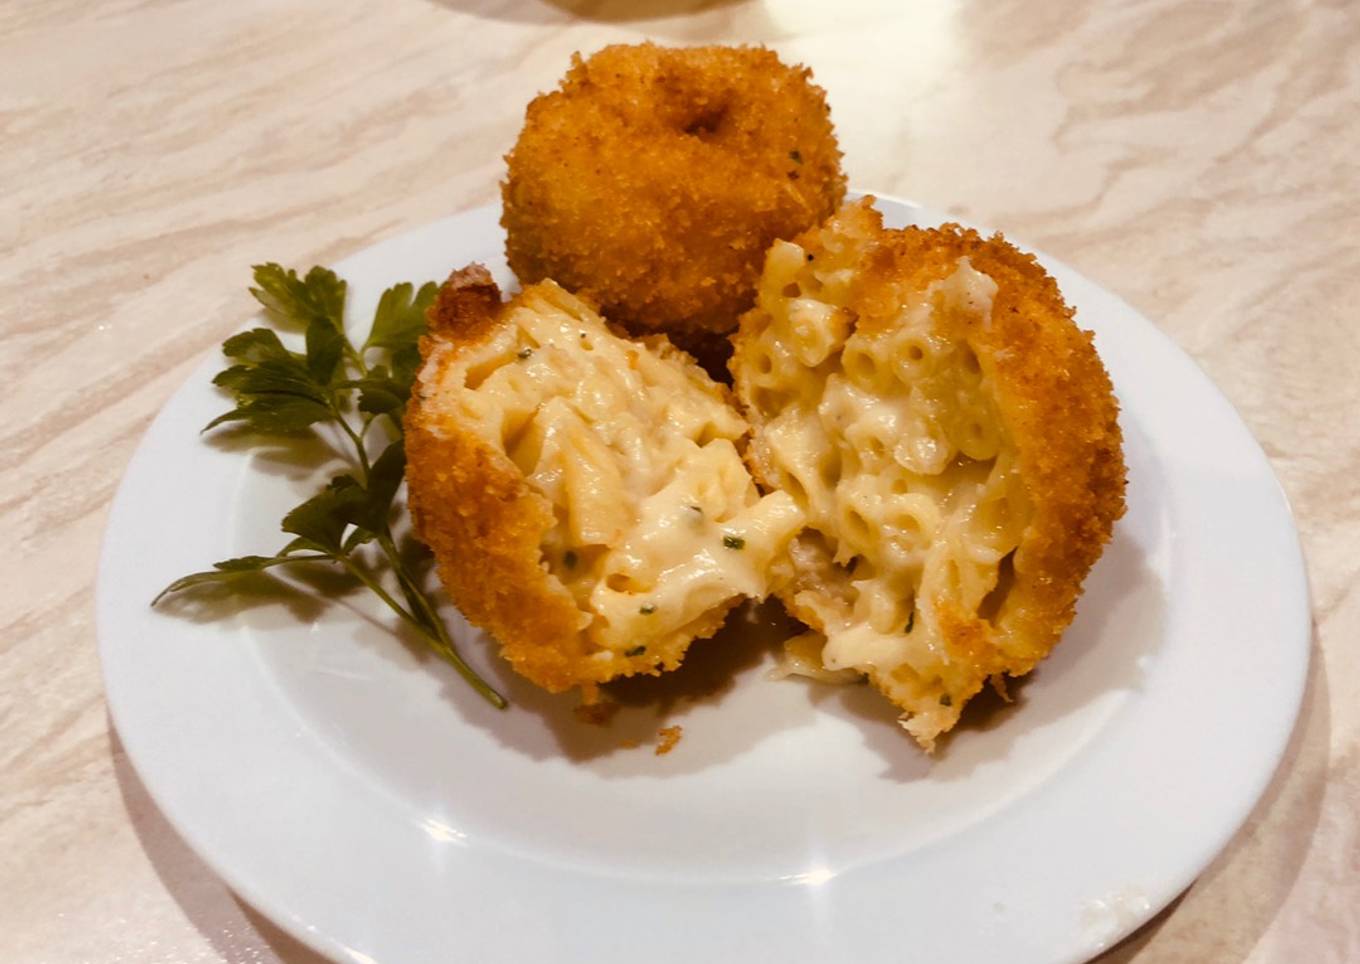 Deep fried mac and cheese balls